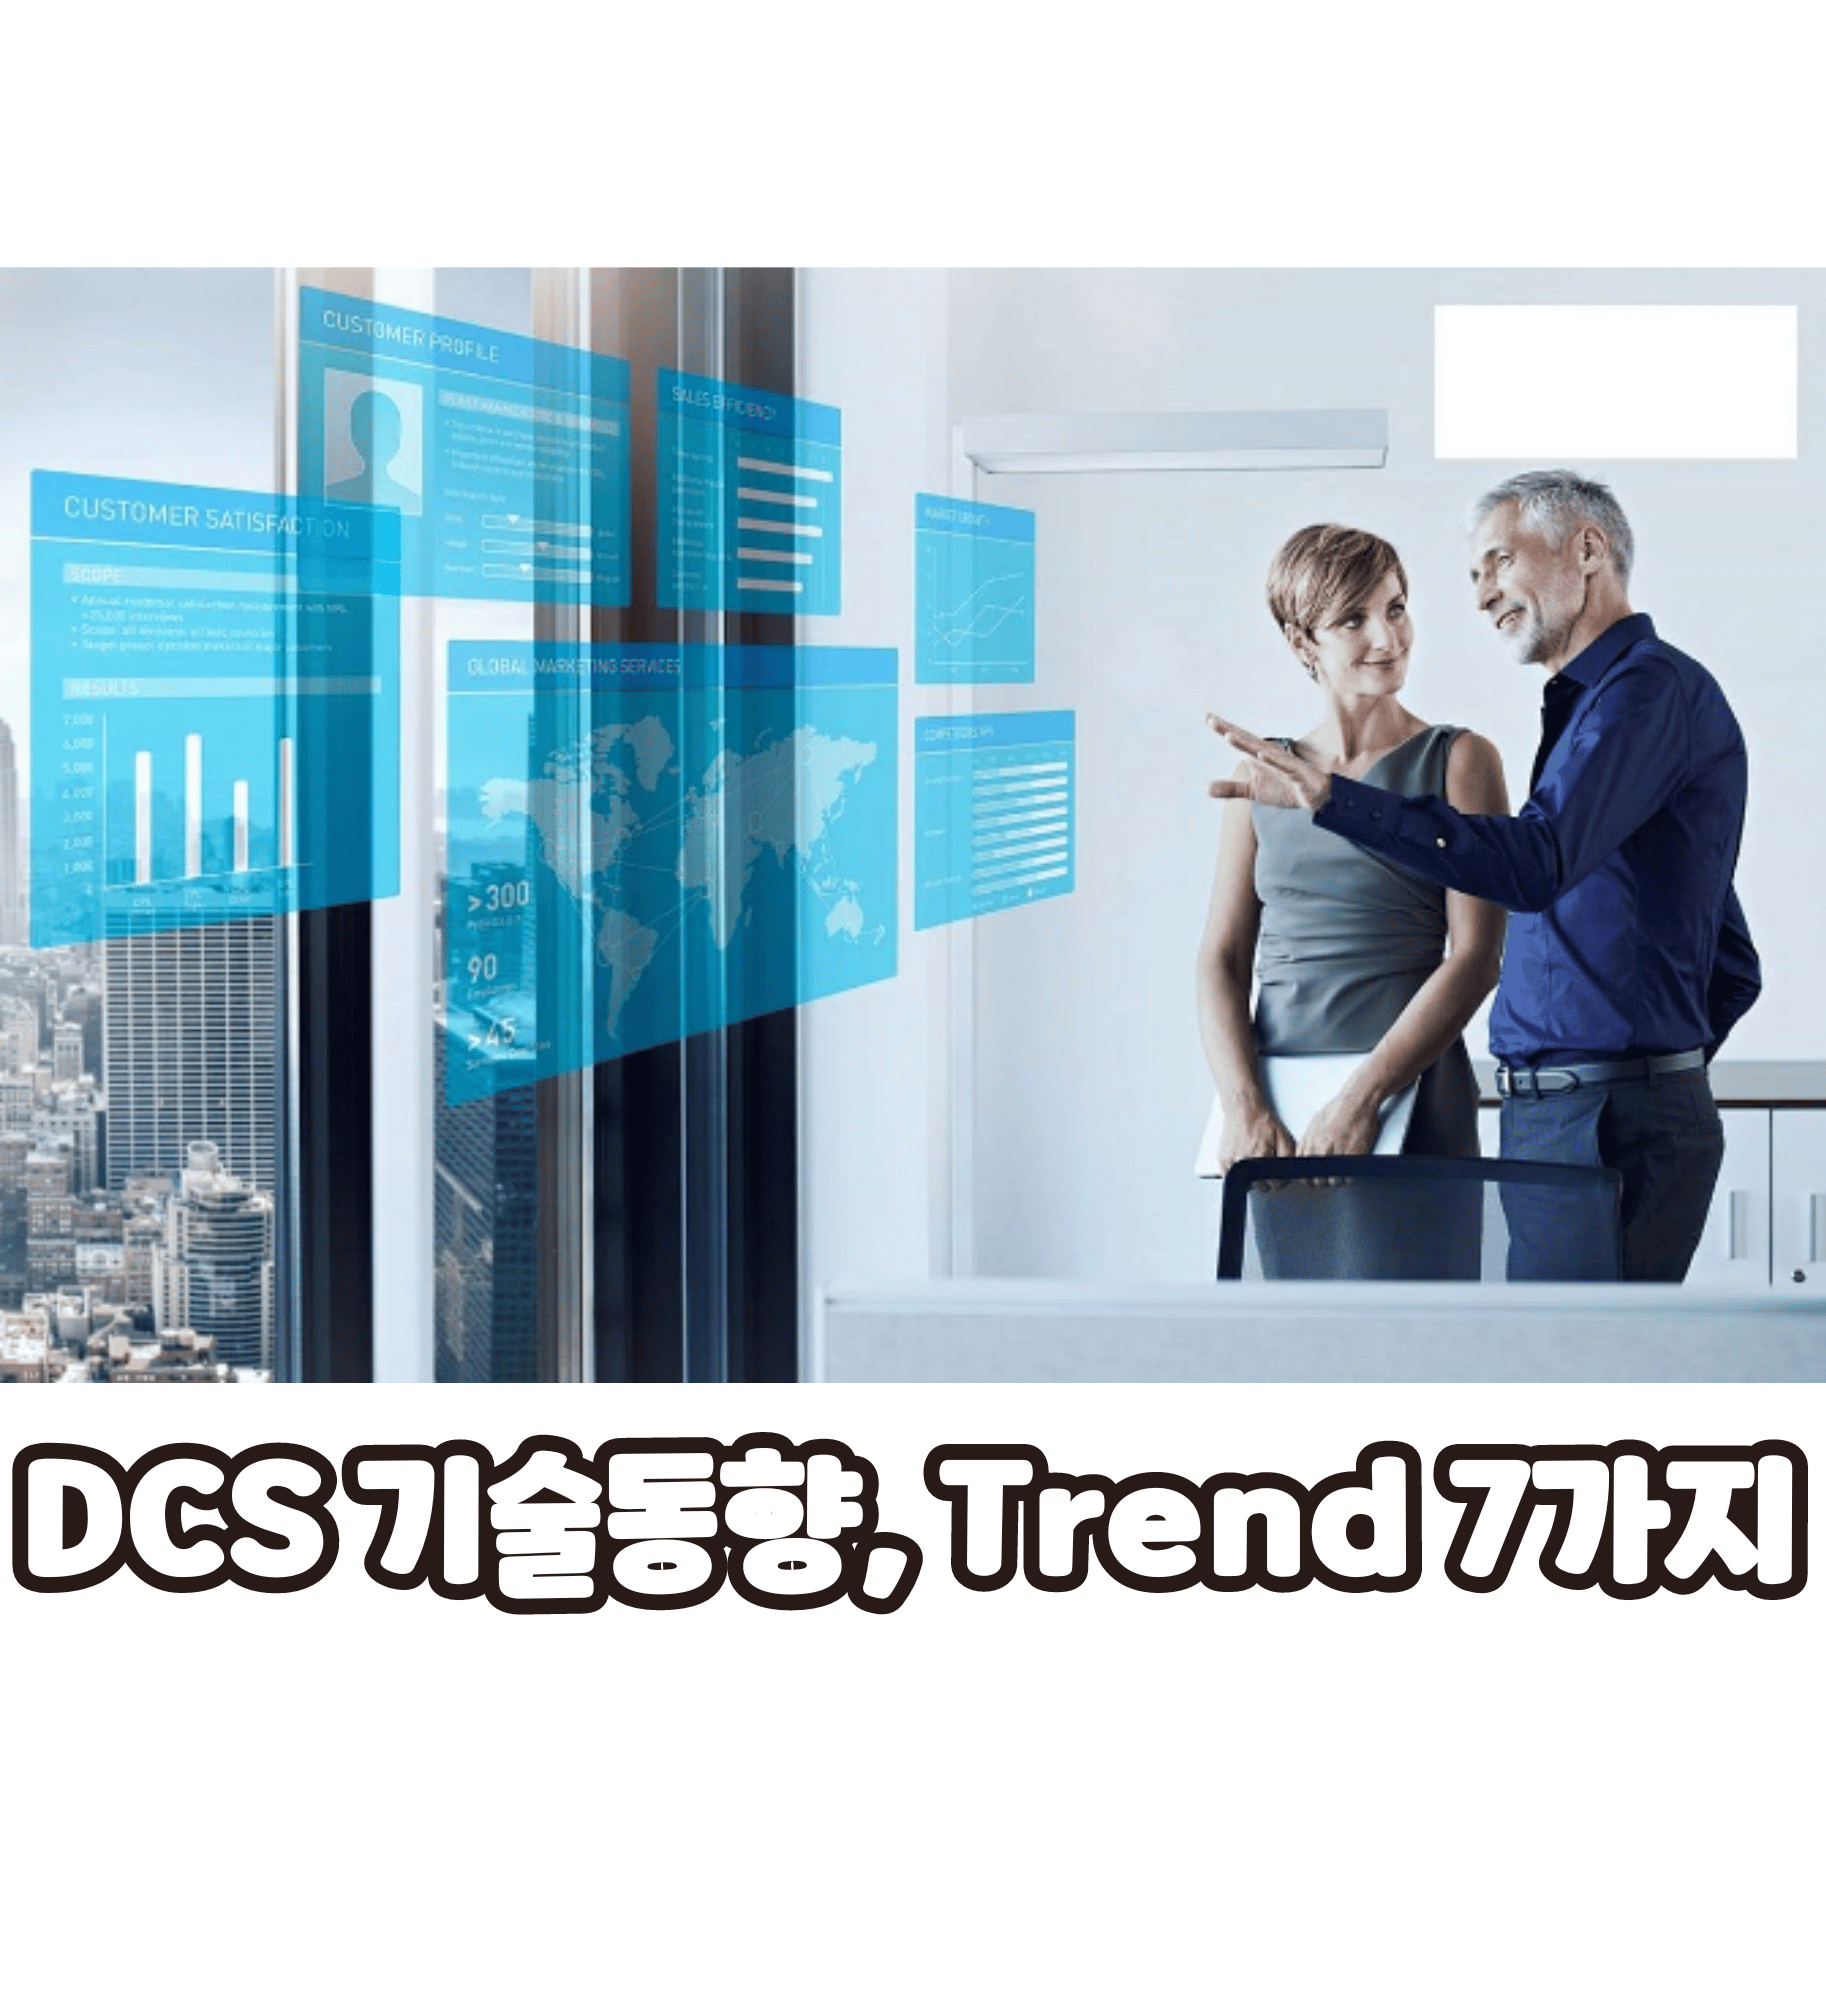 DCS 기술동향, Trend 7가지